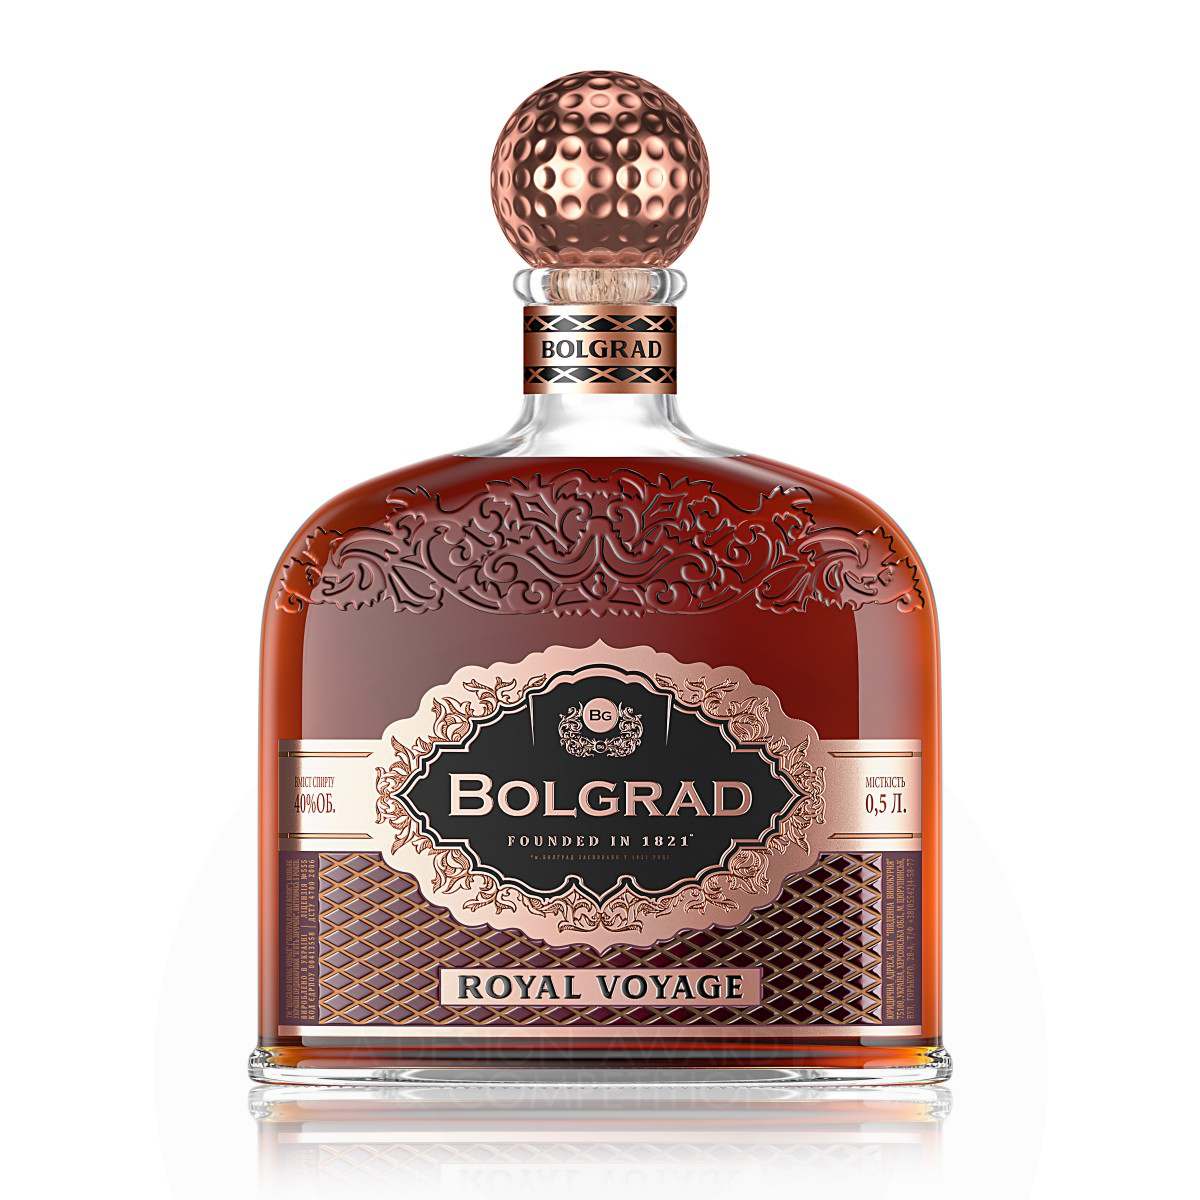 Bolgrad XO Brandies Label by Valerii Sumilov